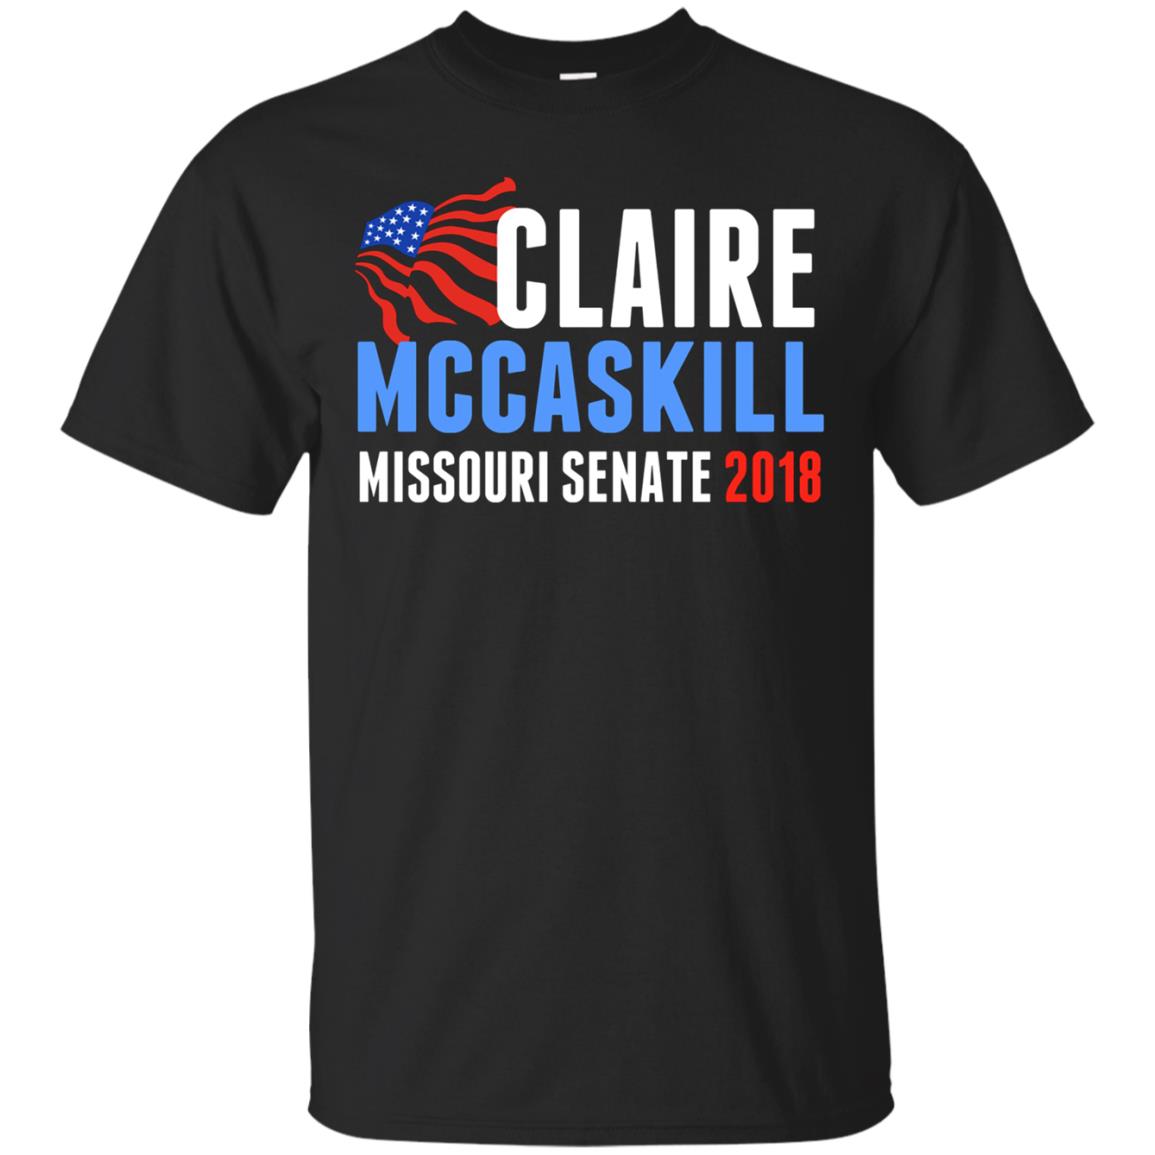 Claire Mccaskill For Missouri Senate 2018 T-shirt.